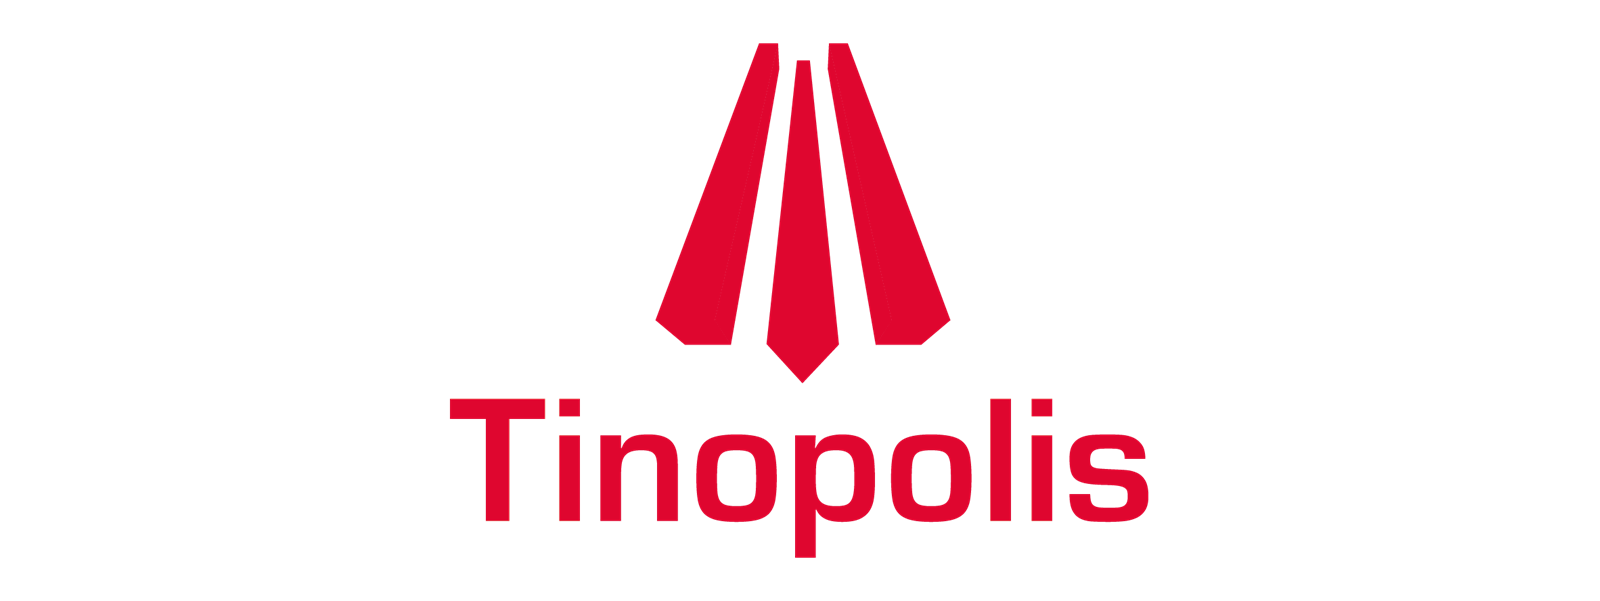 TINOPOLIS TAKES FULL OWNERSHIP OF GROUP